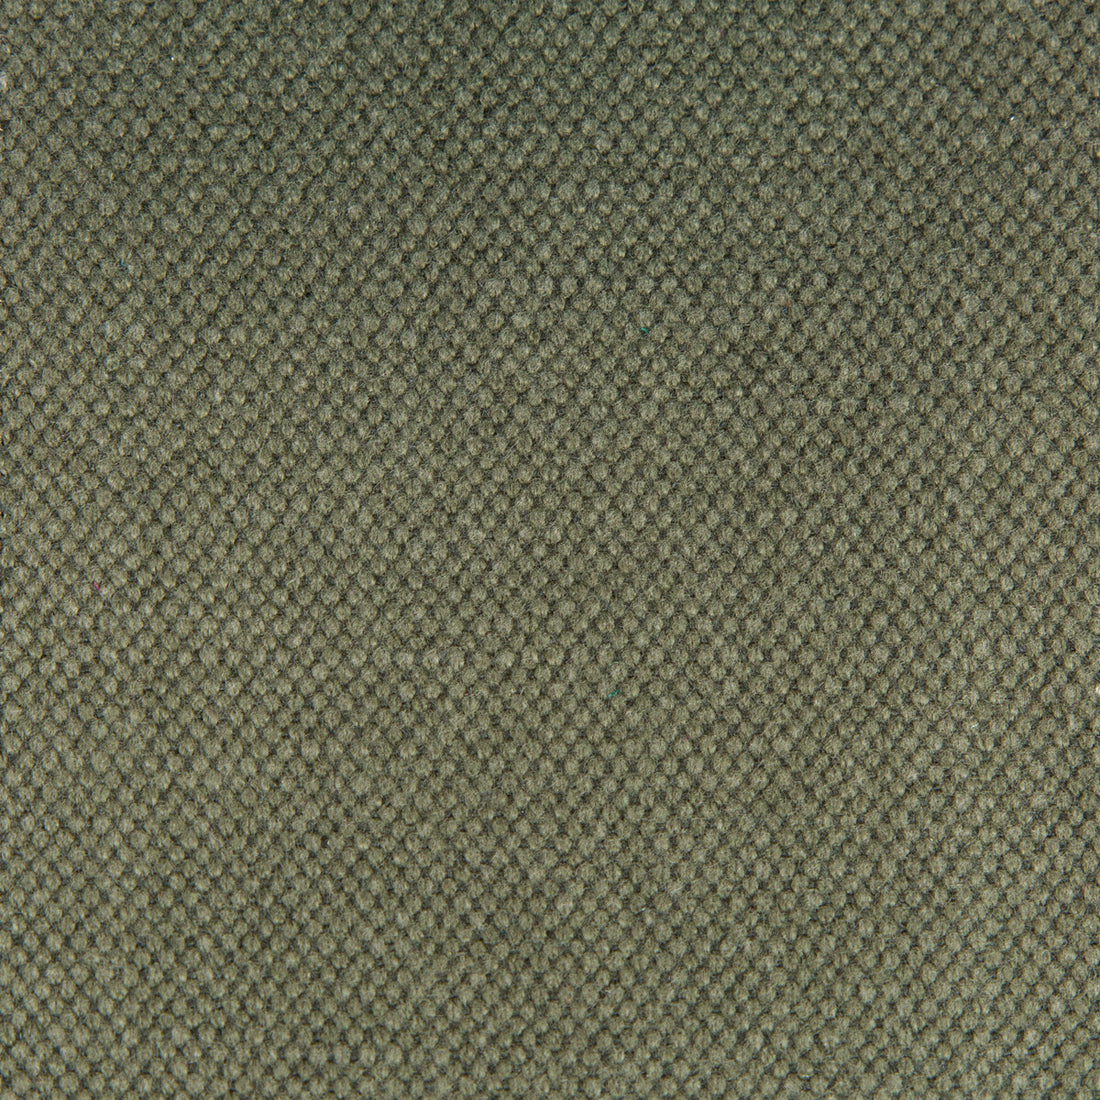 Lima fabric in kaki color - pattern GDT5616.031.0 - by Gaston y Daniela in the Gaston Nuevo Mundo collection